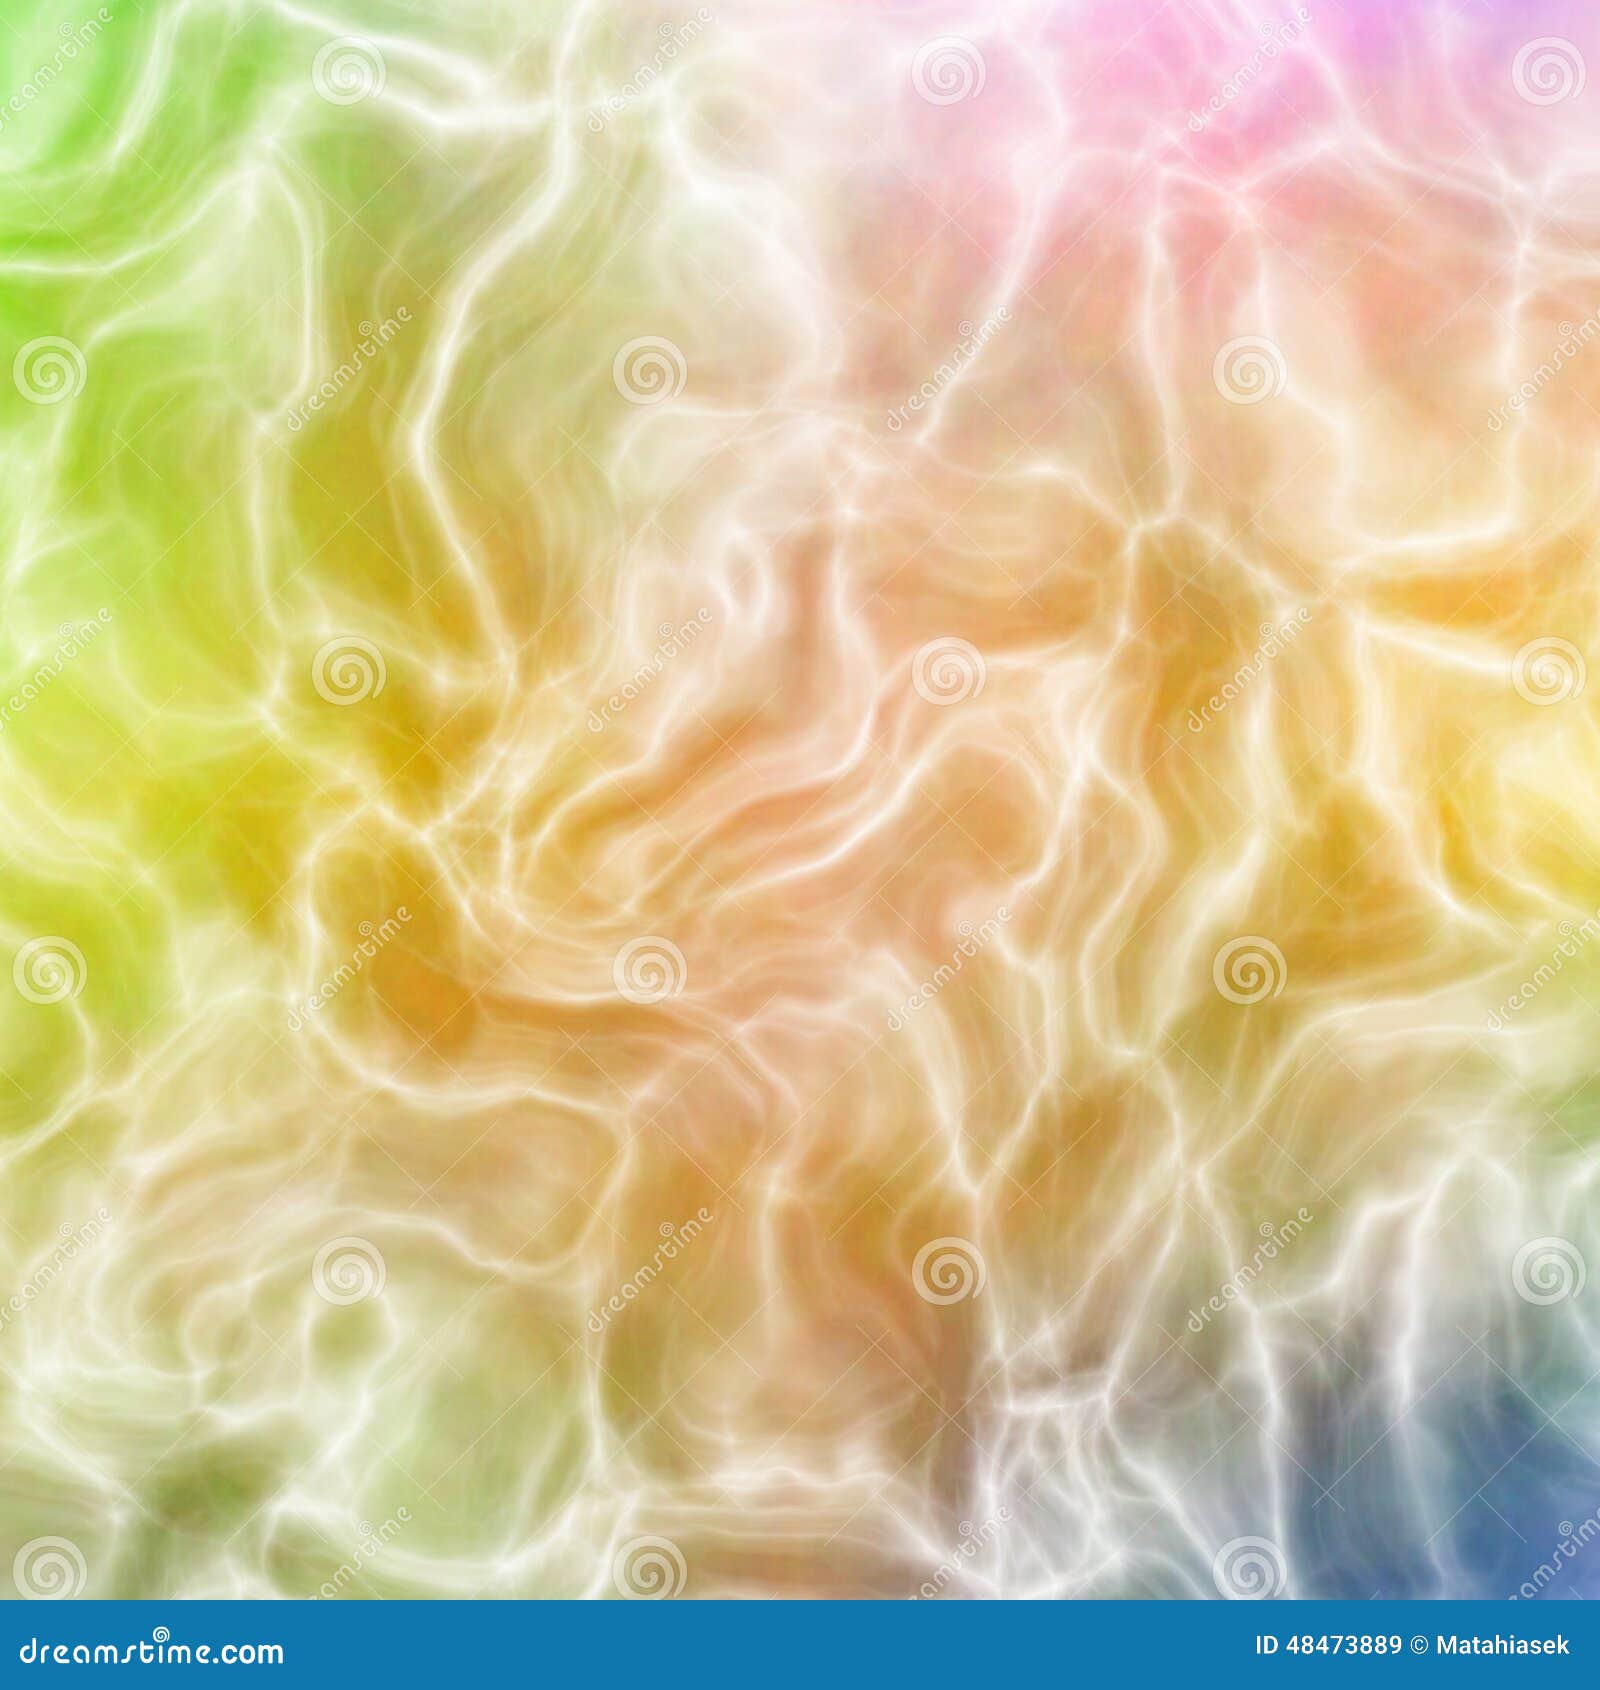 gossamer iridescent texture or background